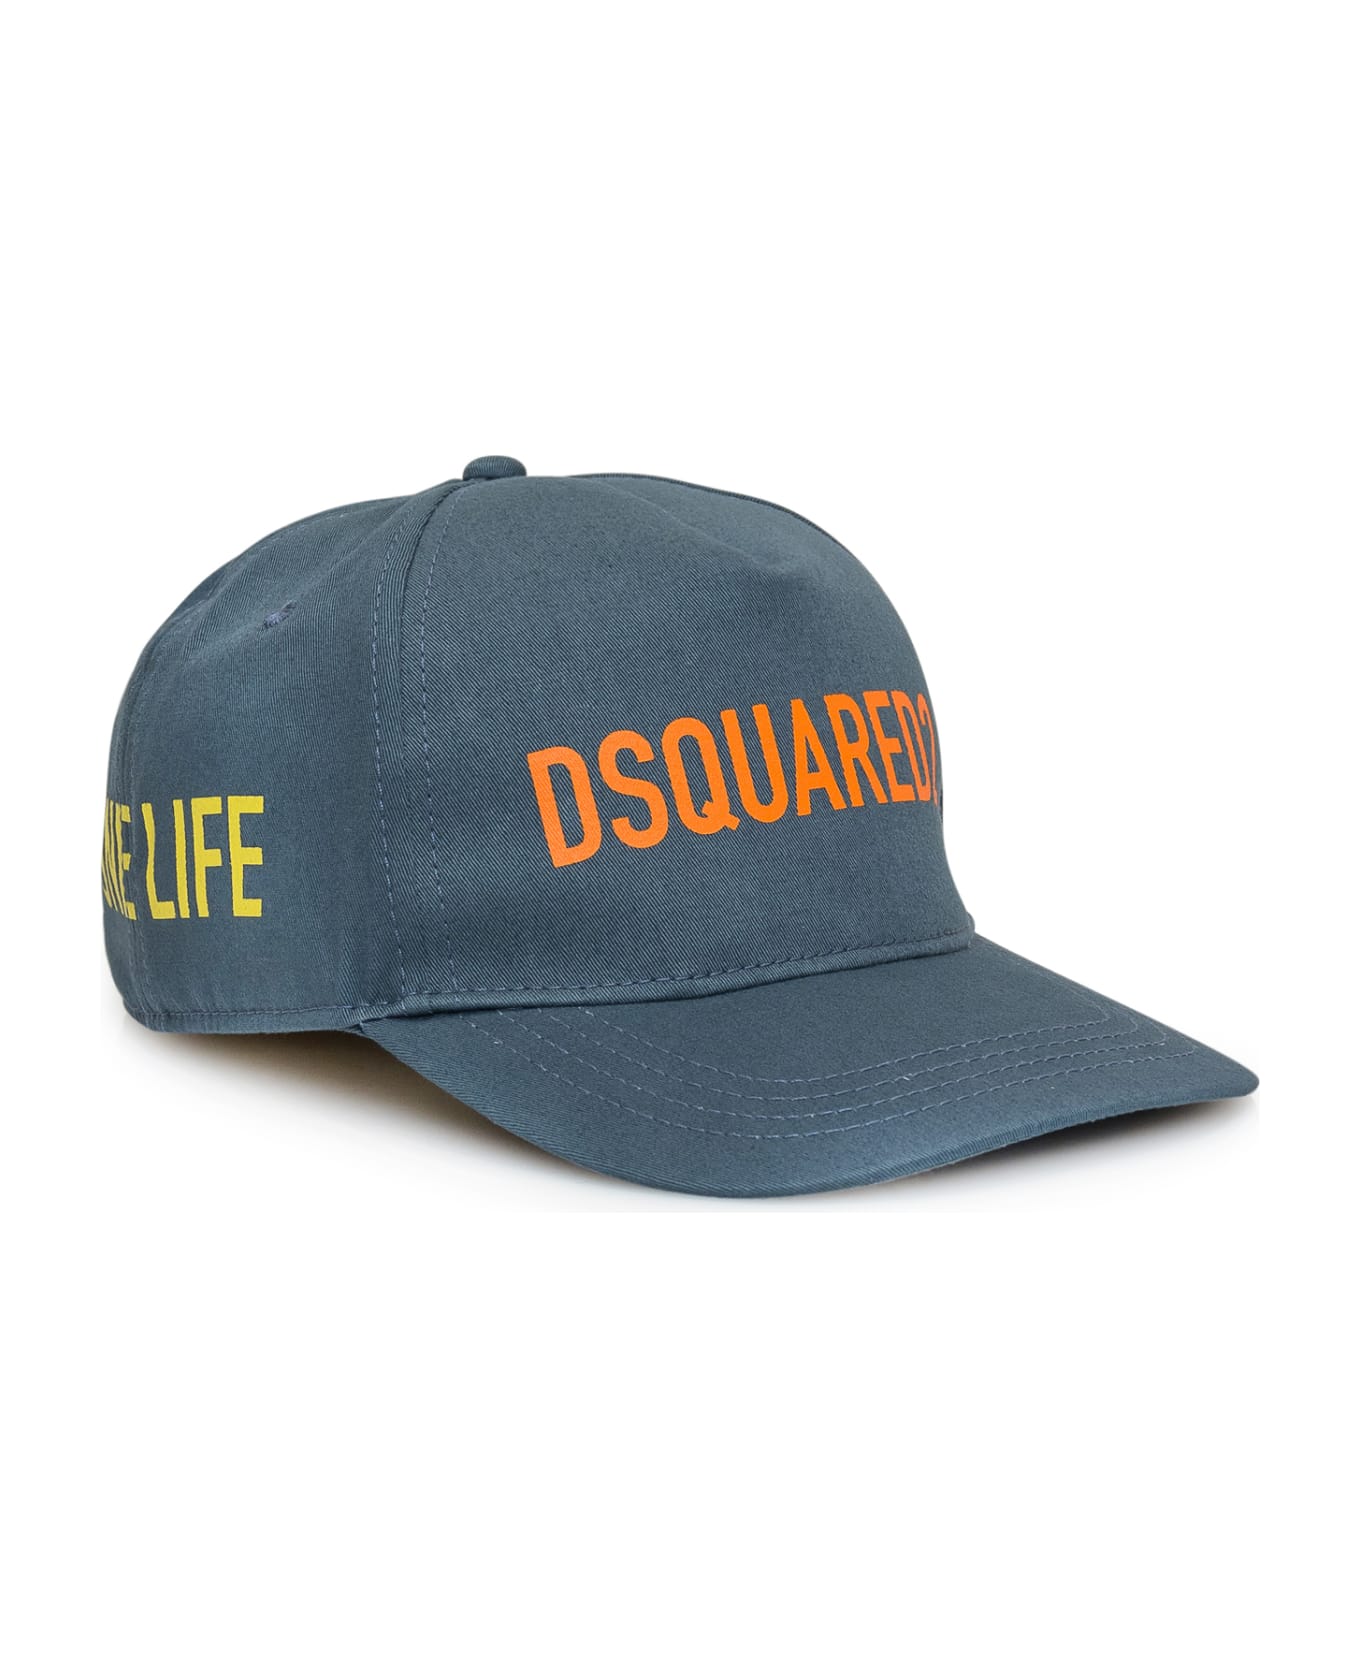 Dsquared2 One Life One Planet Baseball Hat - SEA PINE 帽子